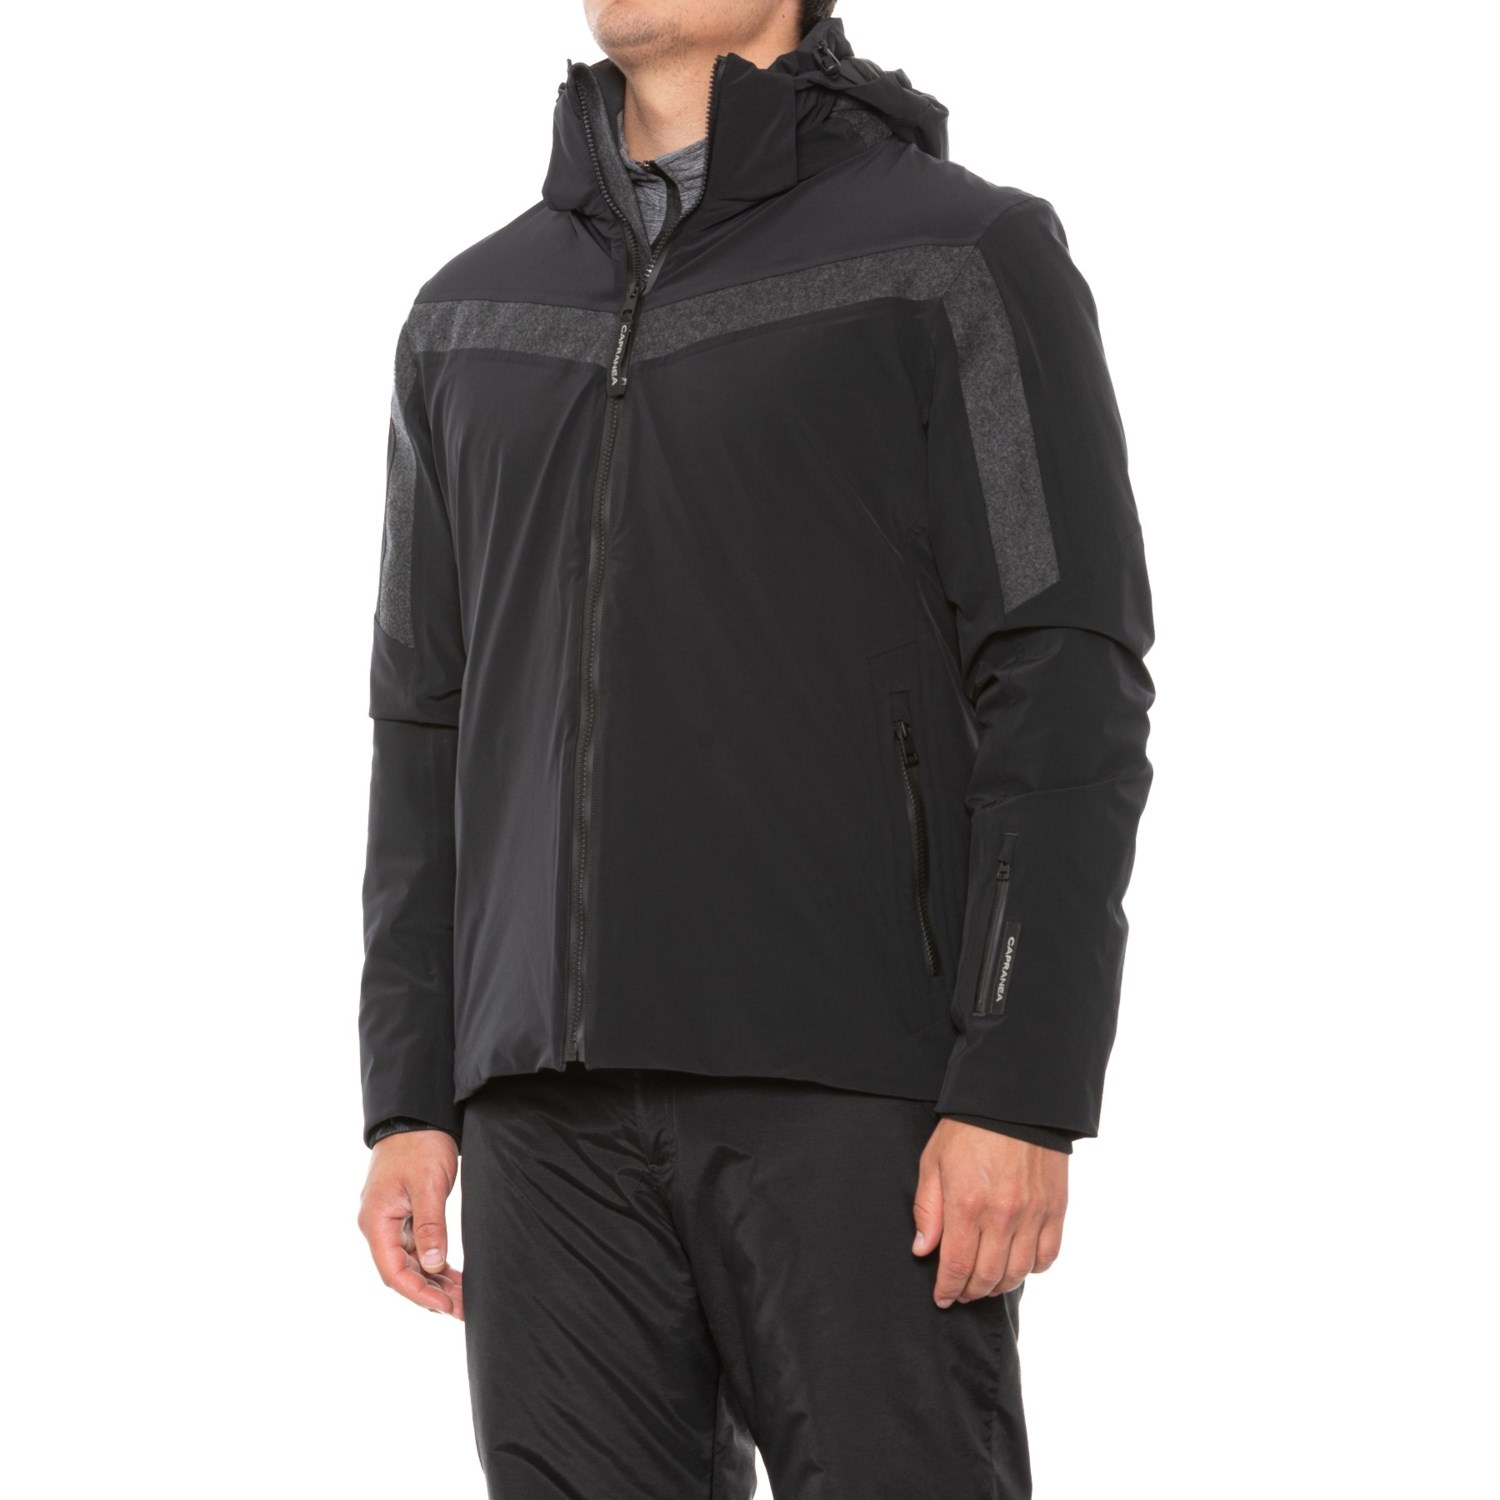 CAPRANEA Boval PrimaLoft® Ski Jacket - Waterproof, Insulated - Save 62%